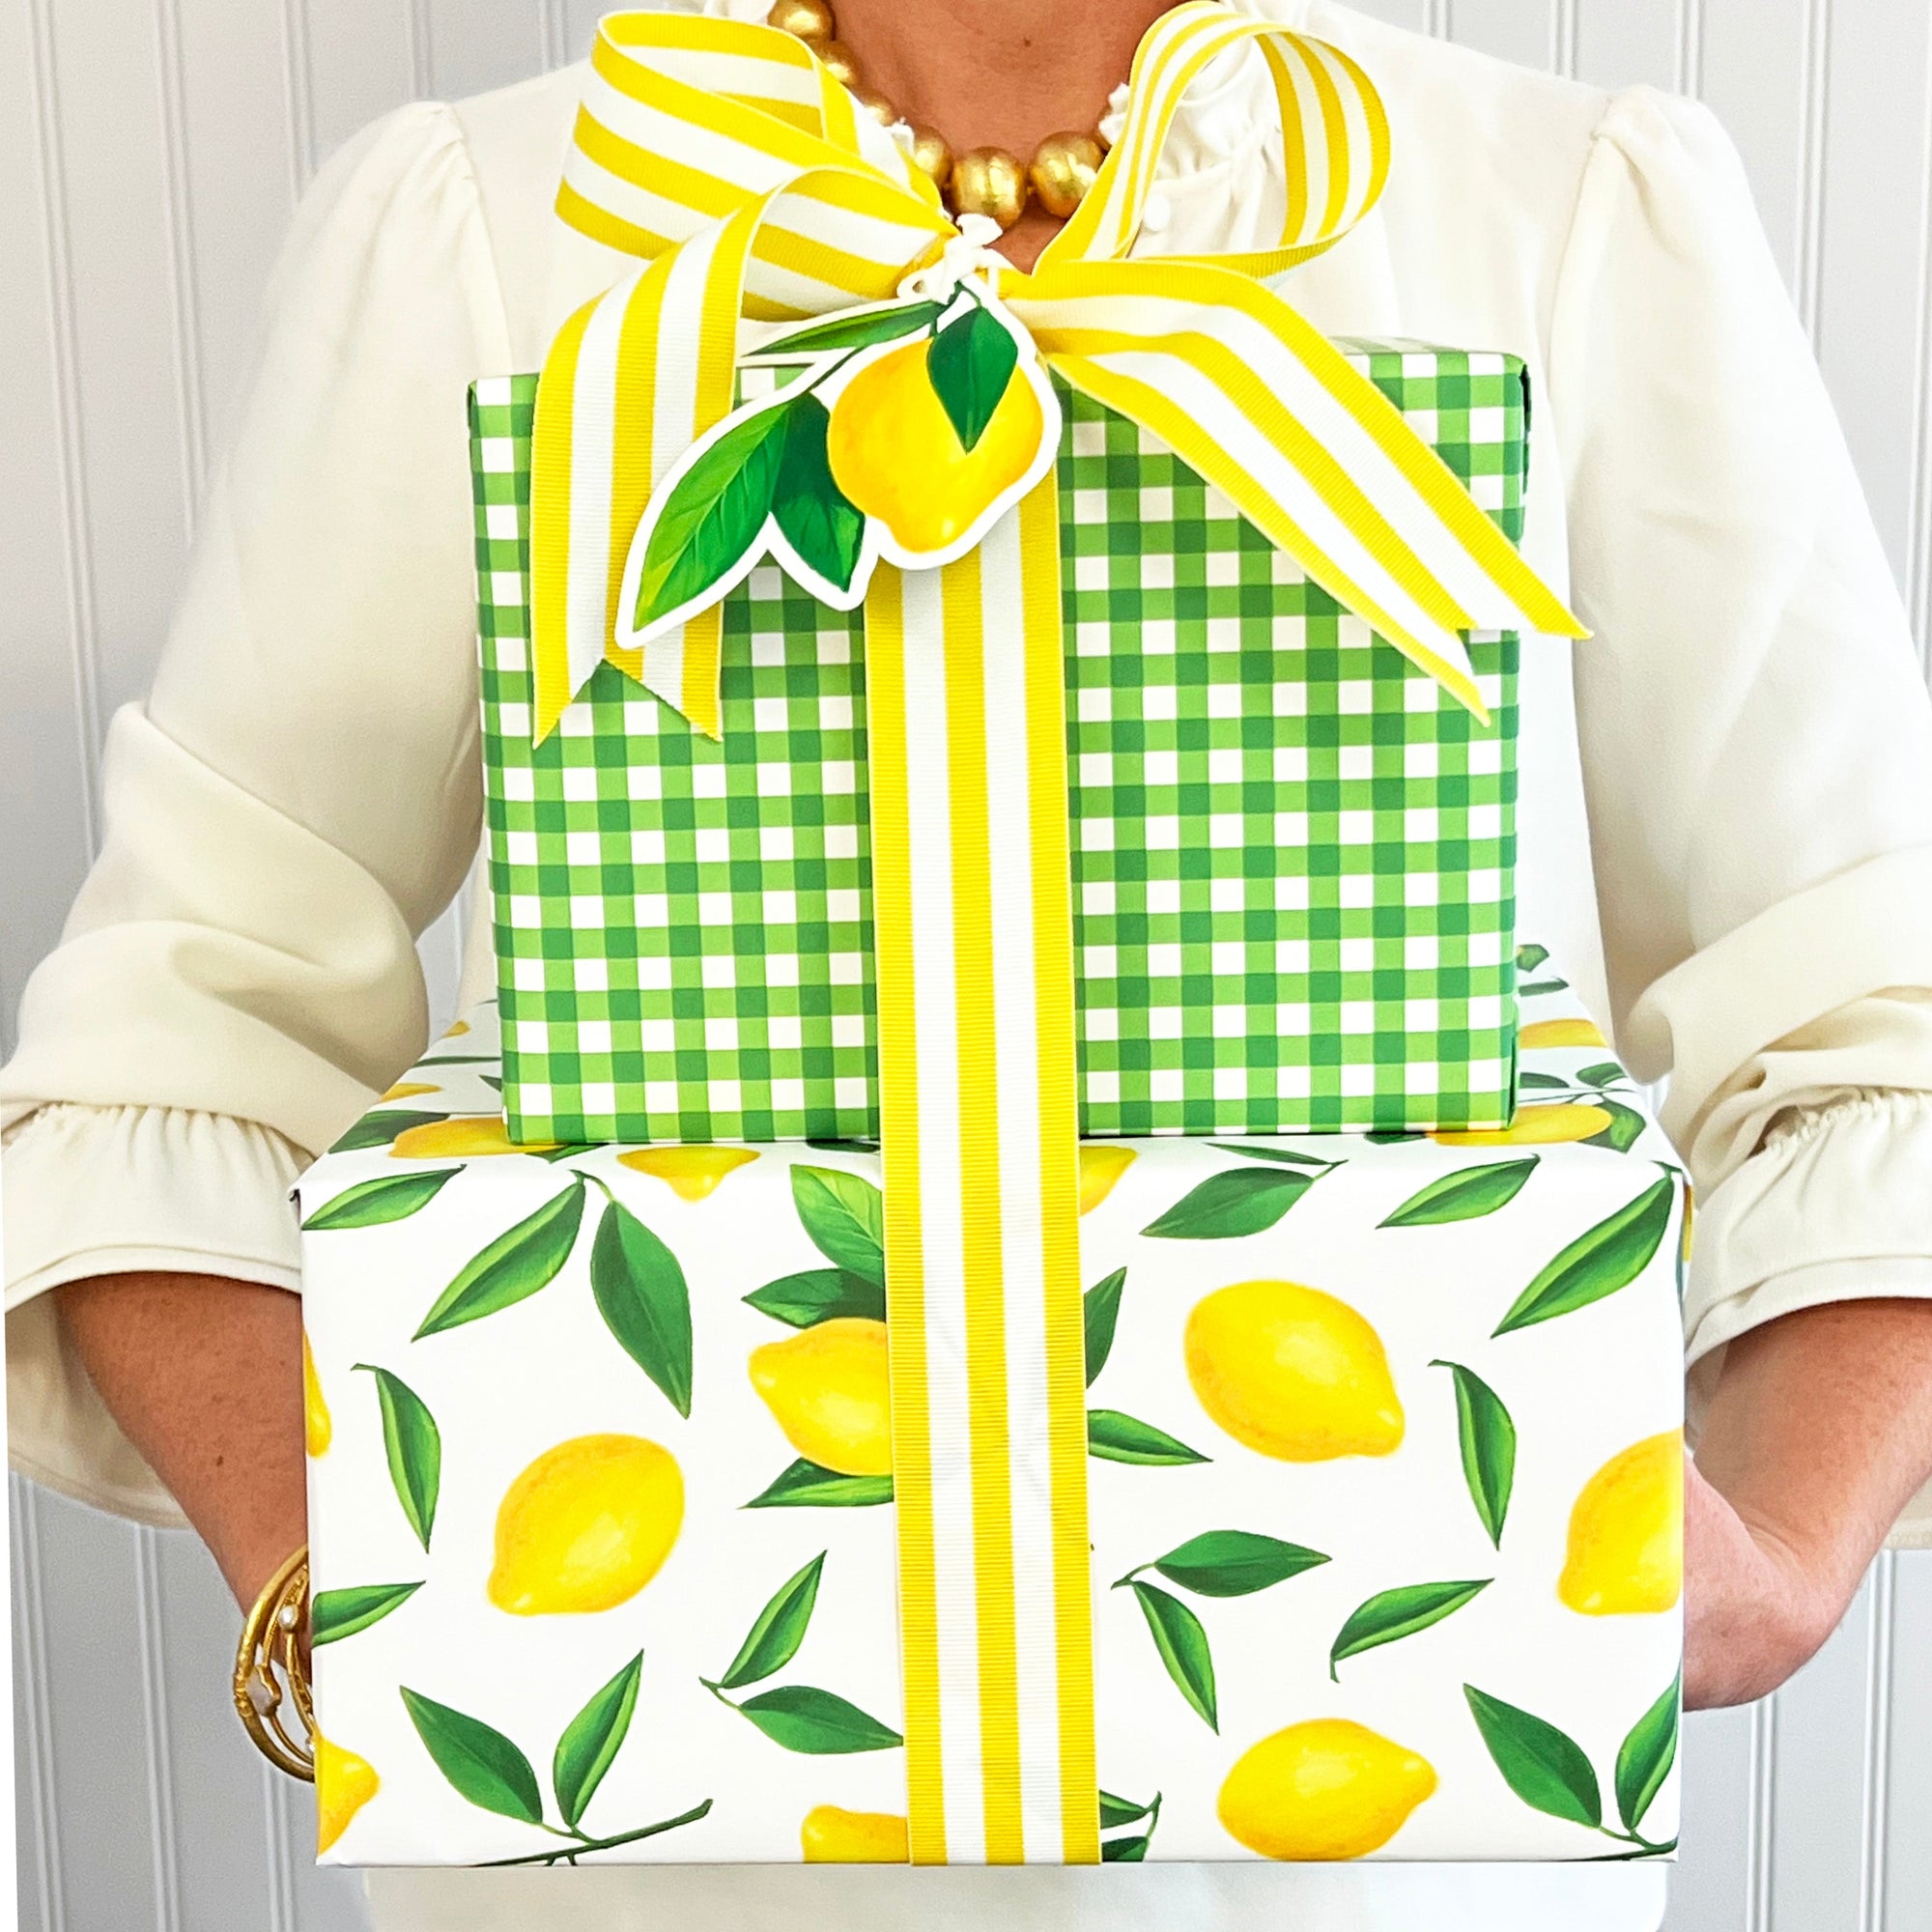 Stock Shoppe: Lemon Die-Cut Gift Tags